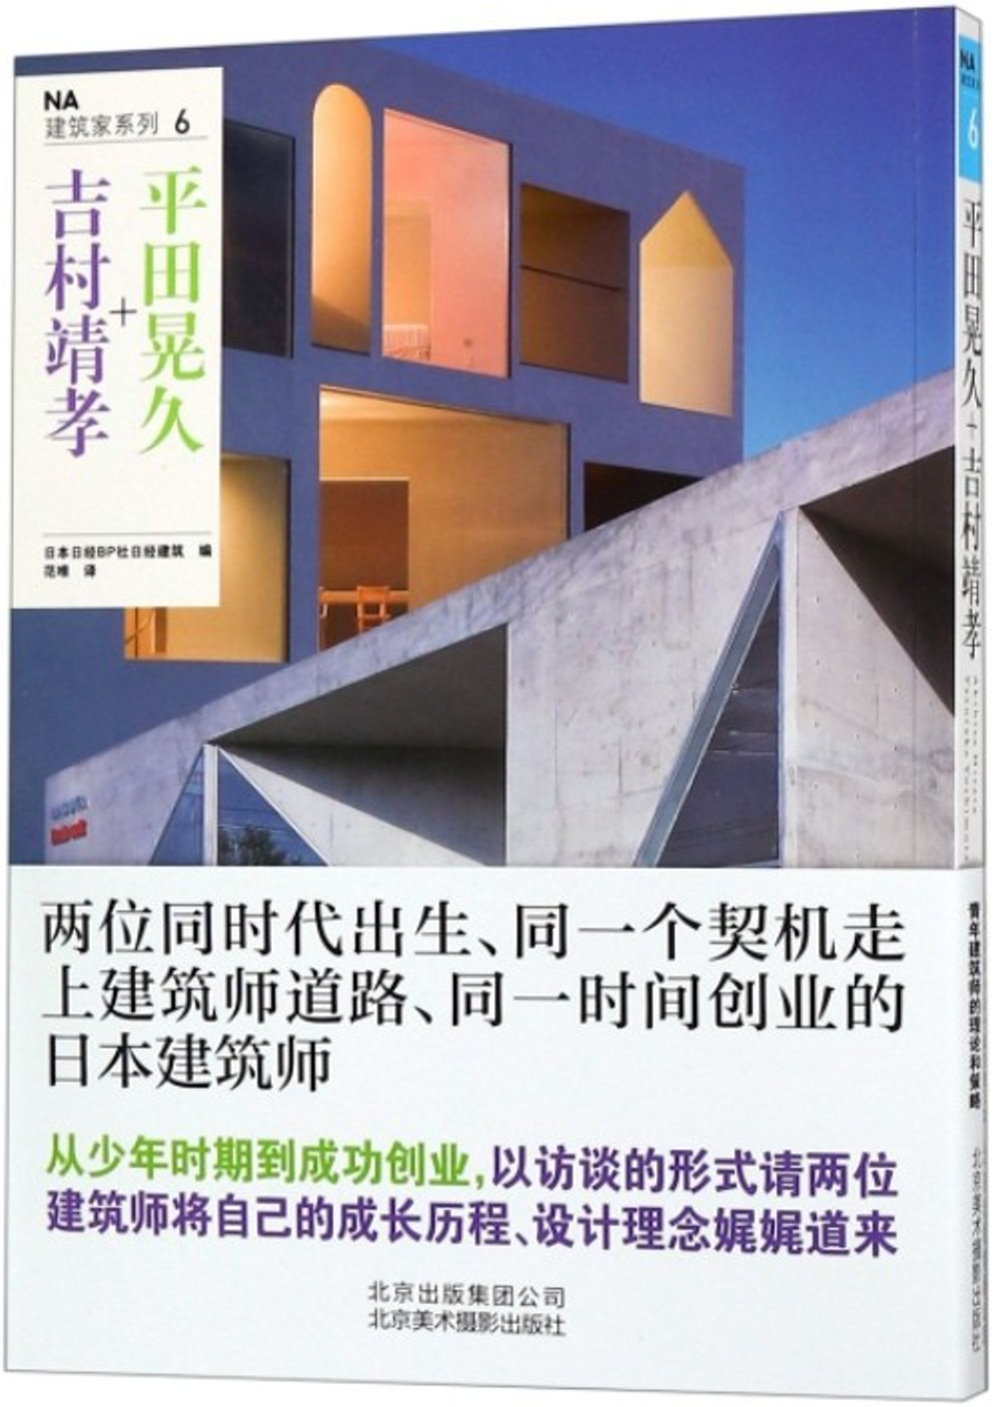 NA建築家系列（6）：平田晃久+吉村靖孝